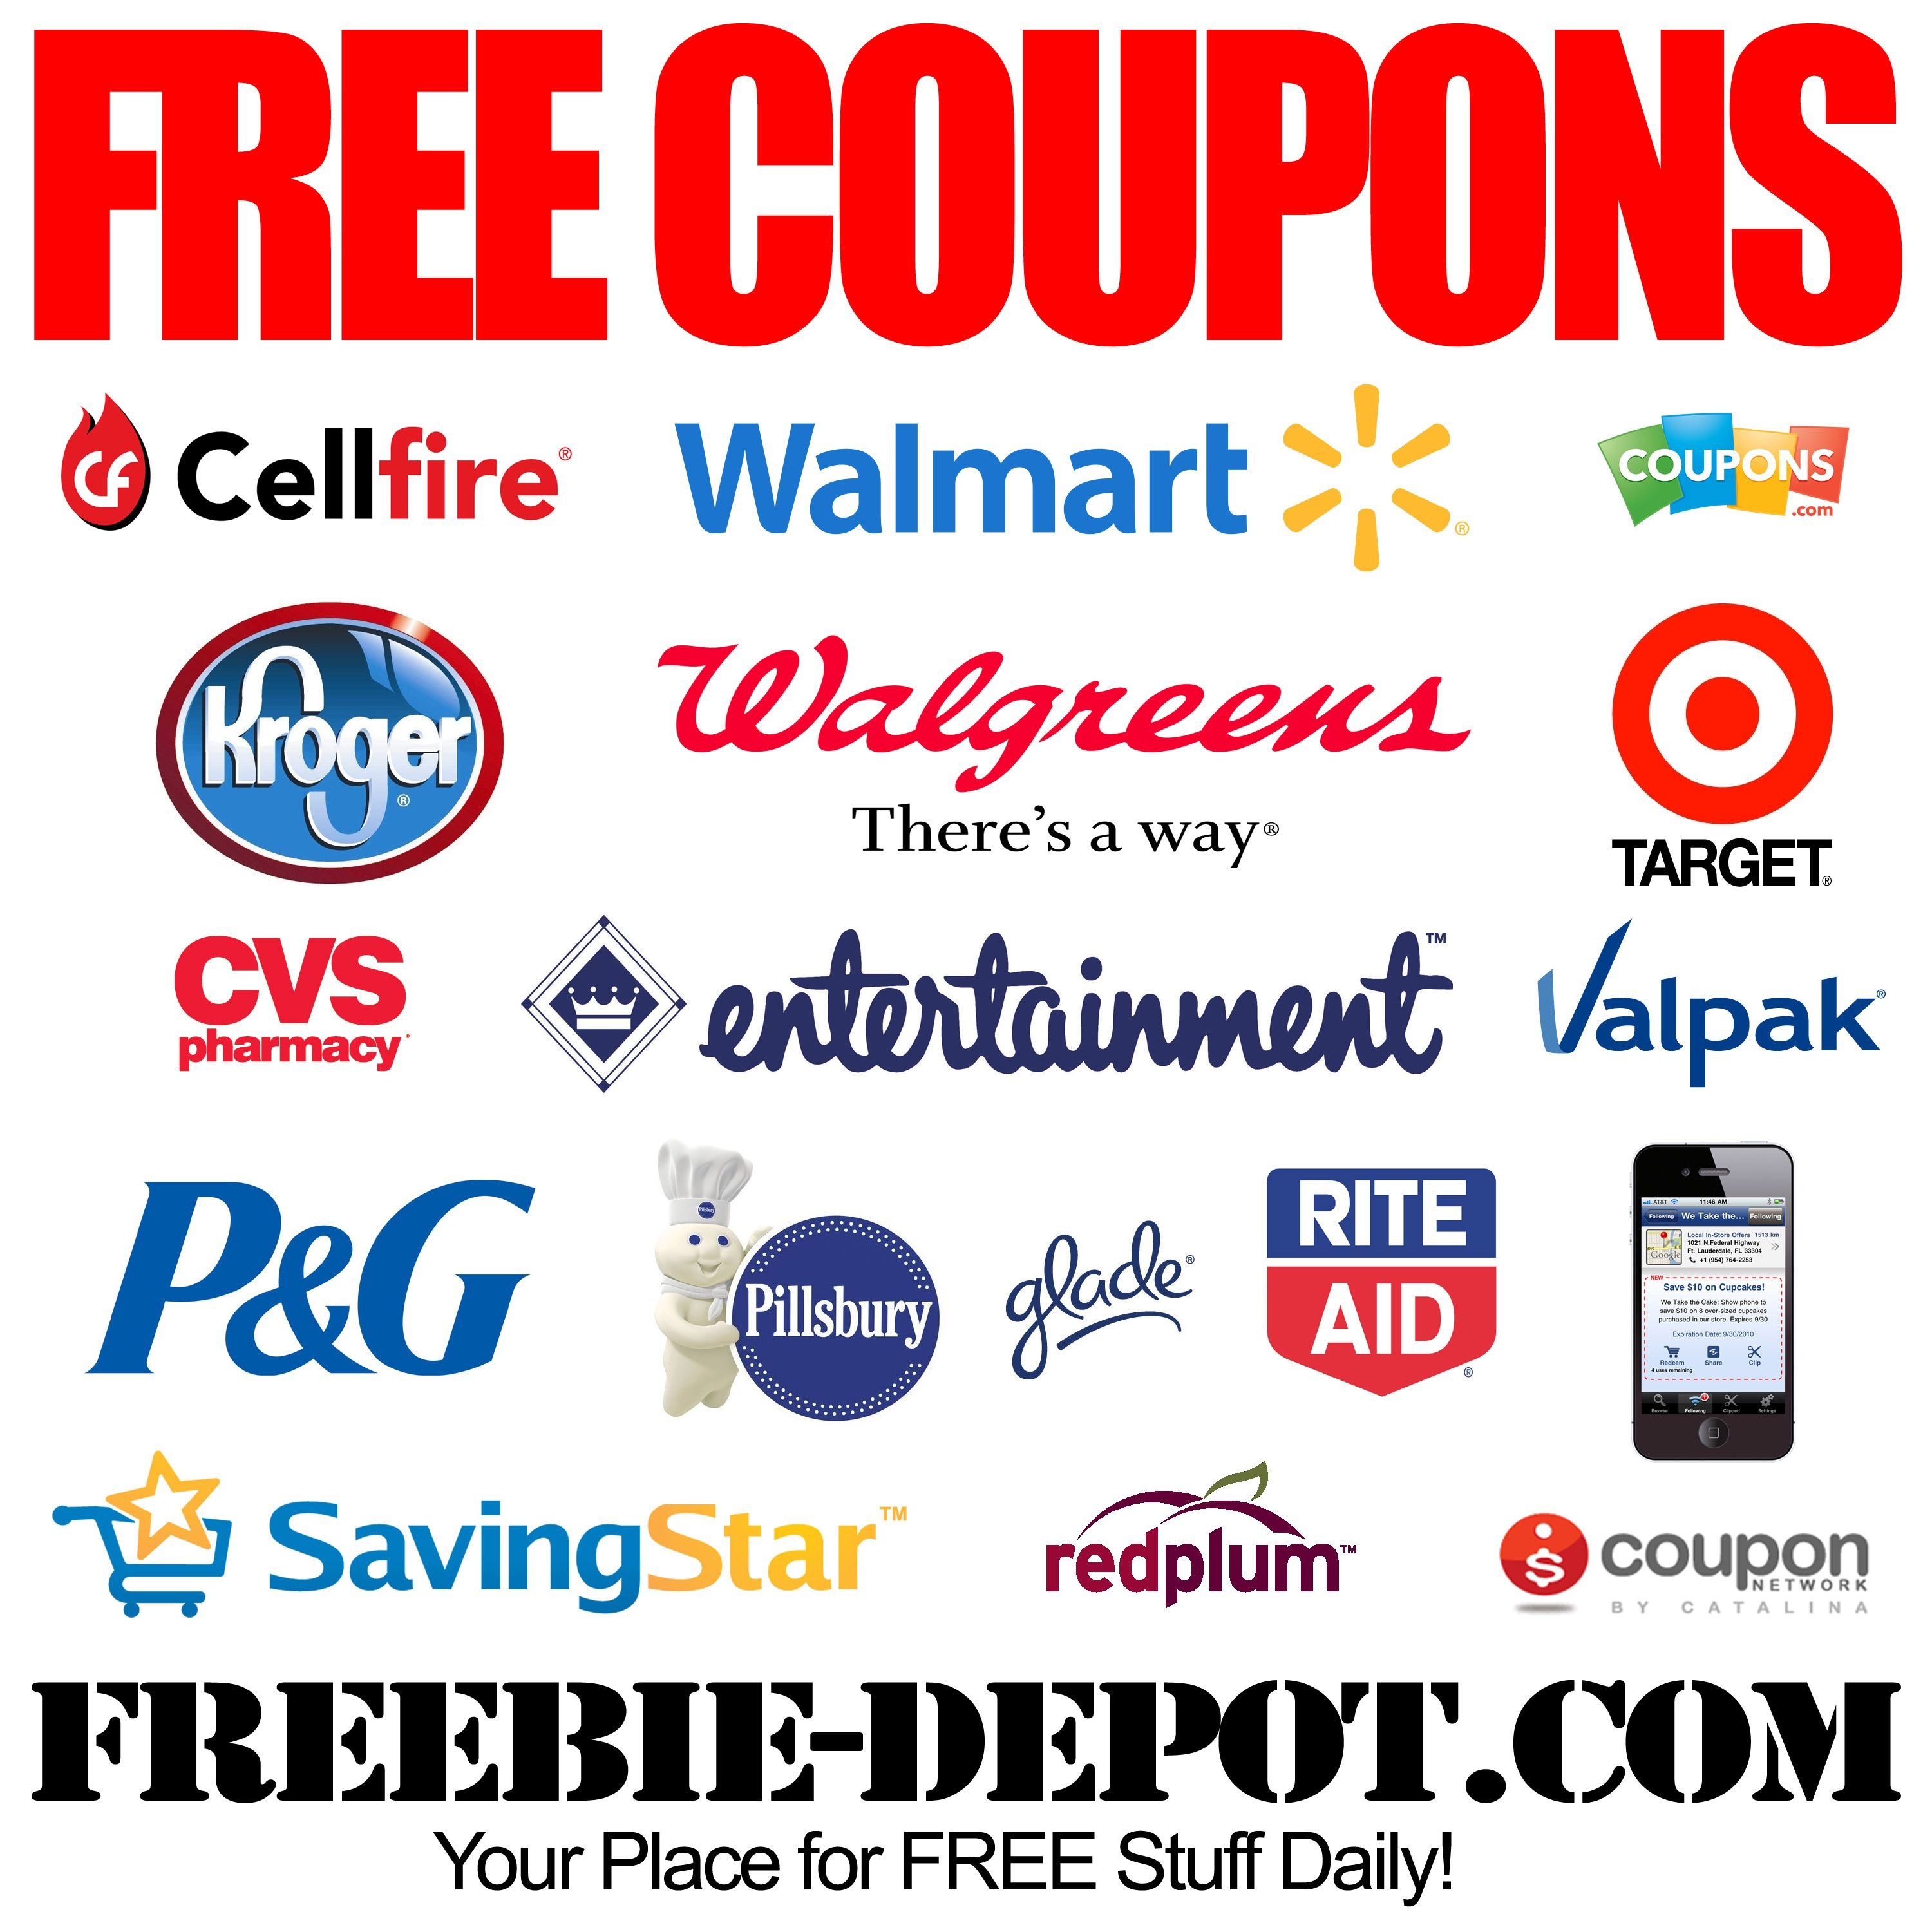 Free Coupons - Free Printable Coupons - Free Grocery Coupons - Free Printable Coupons Without Downloading Coupon Printer